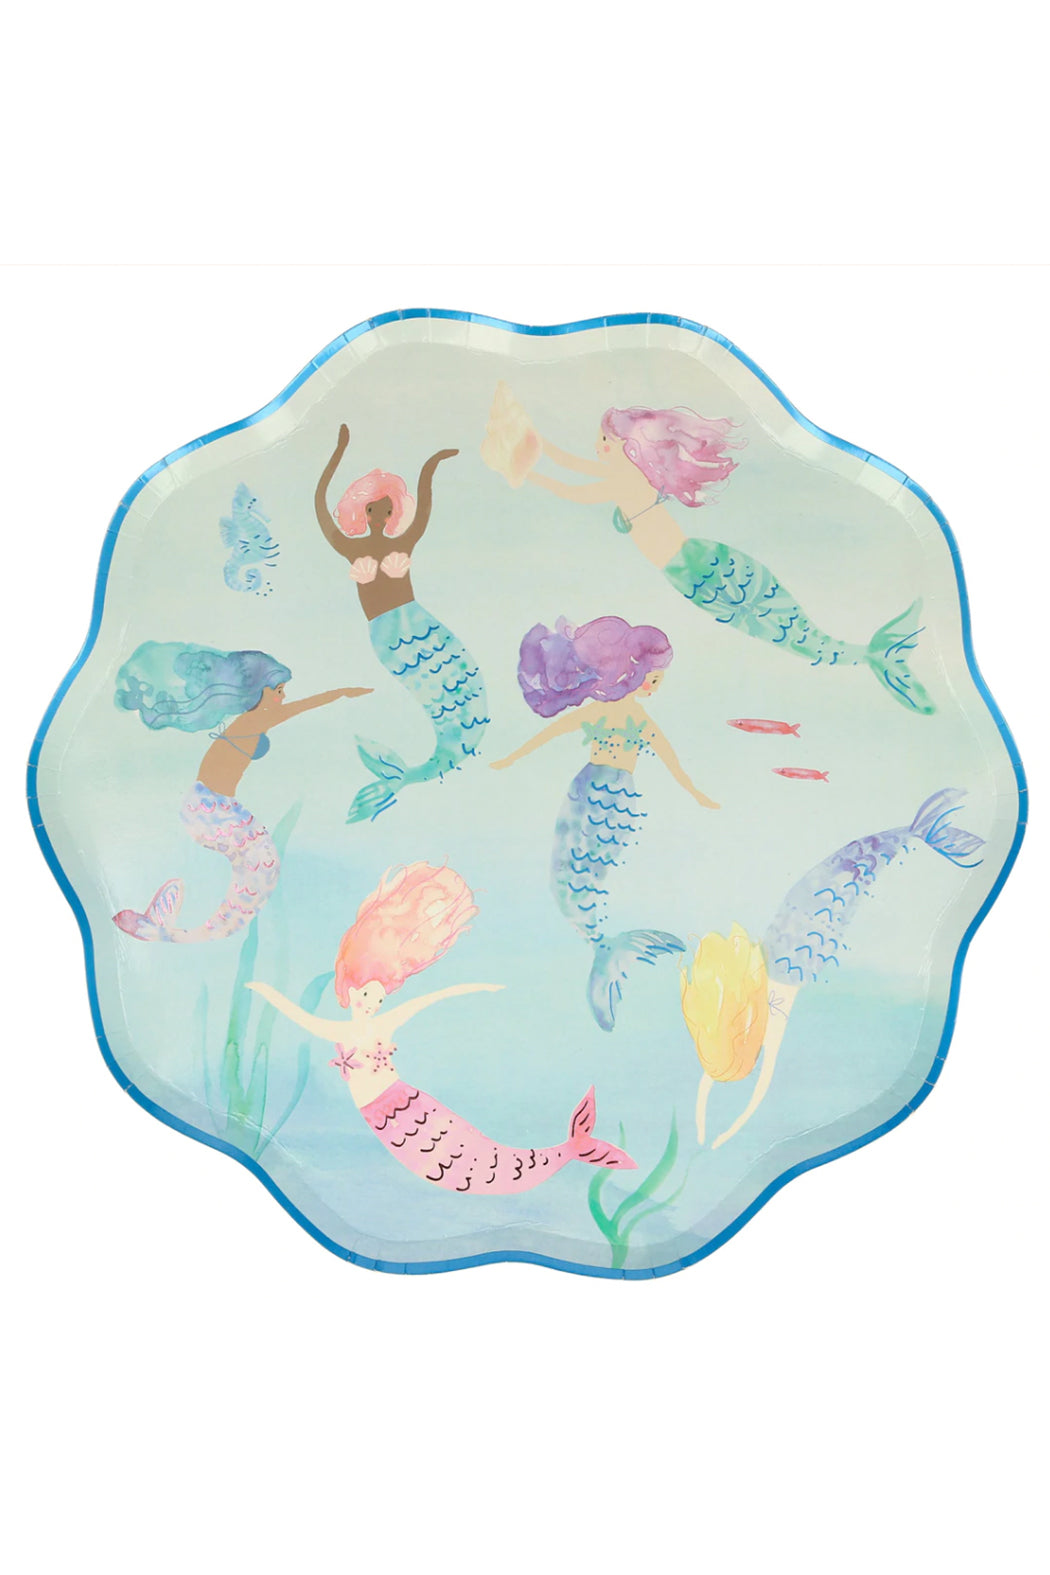 Meri Meri Mermaids Swimming Side Plates - Set Of 8